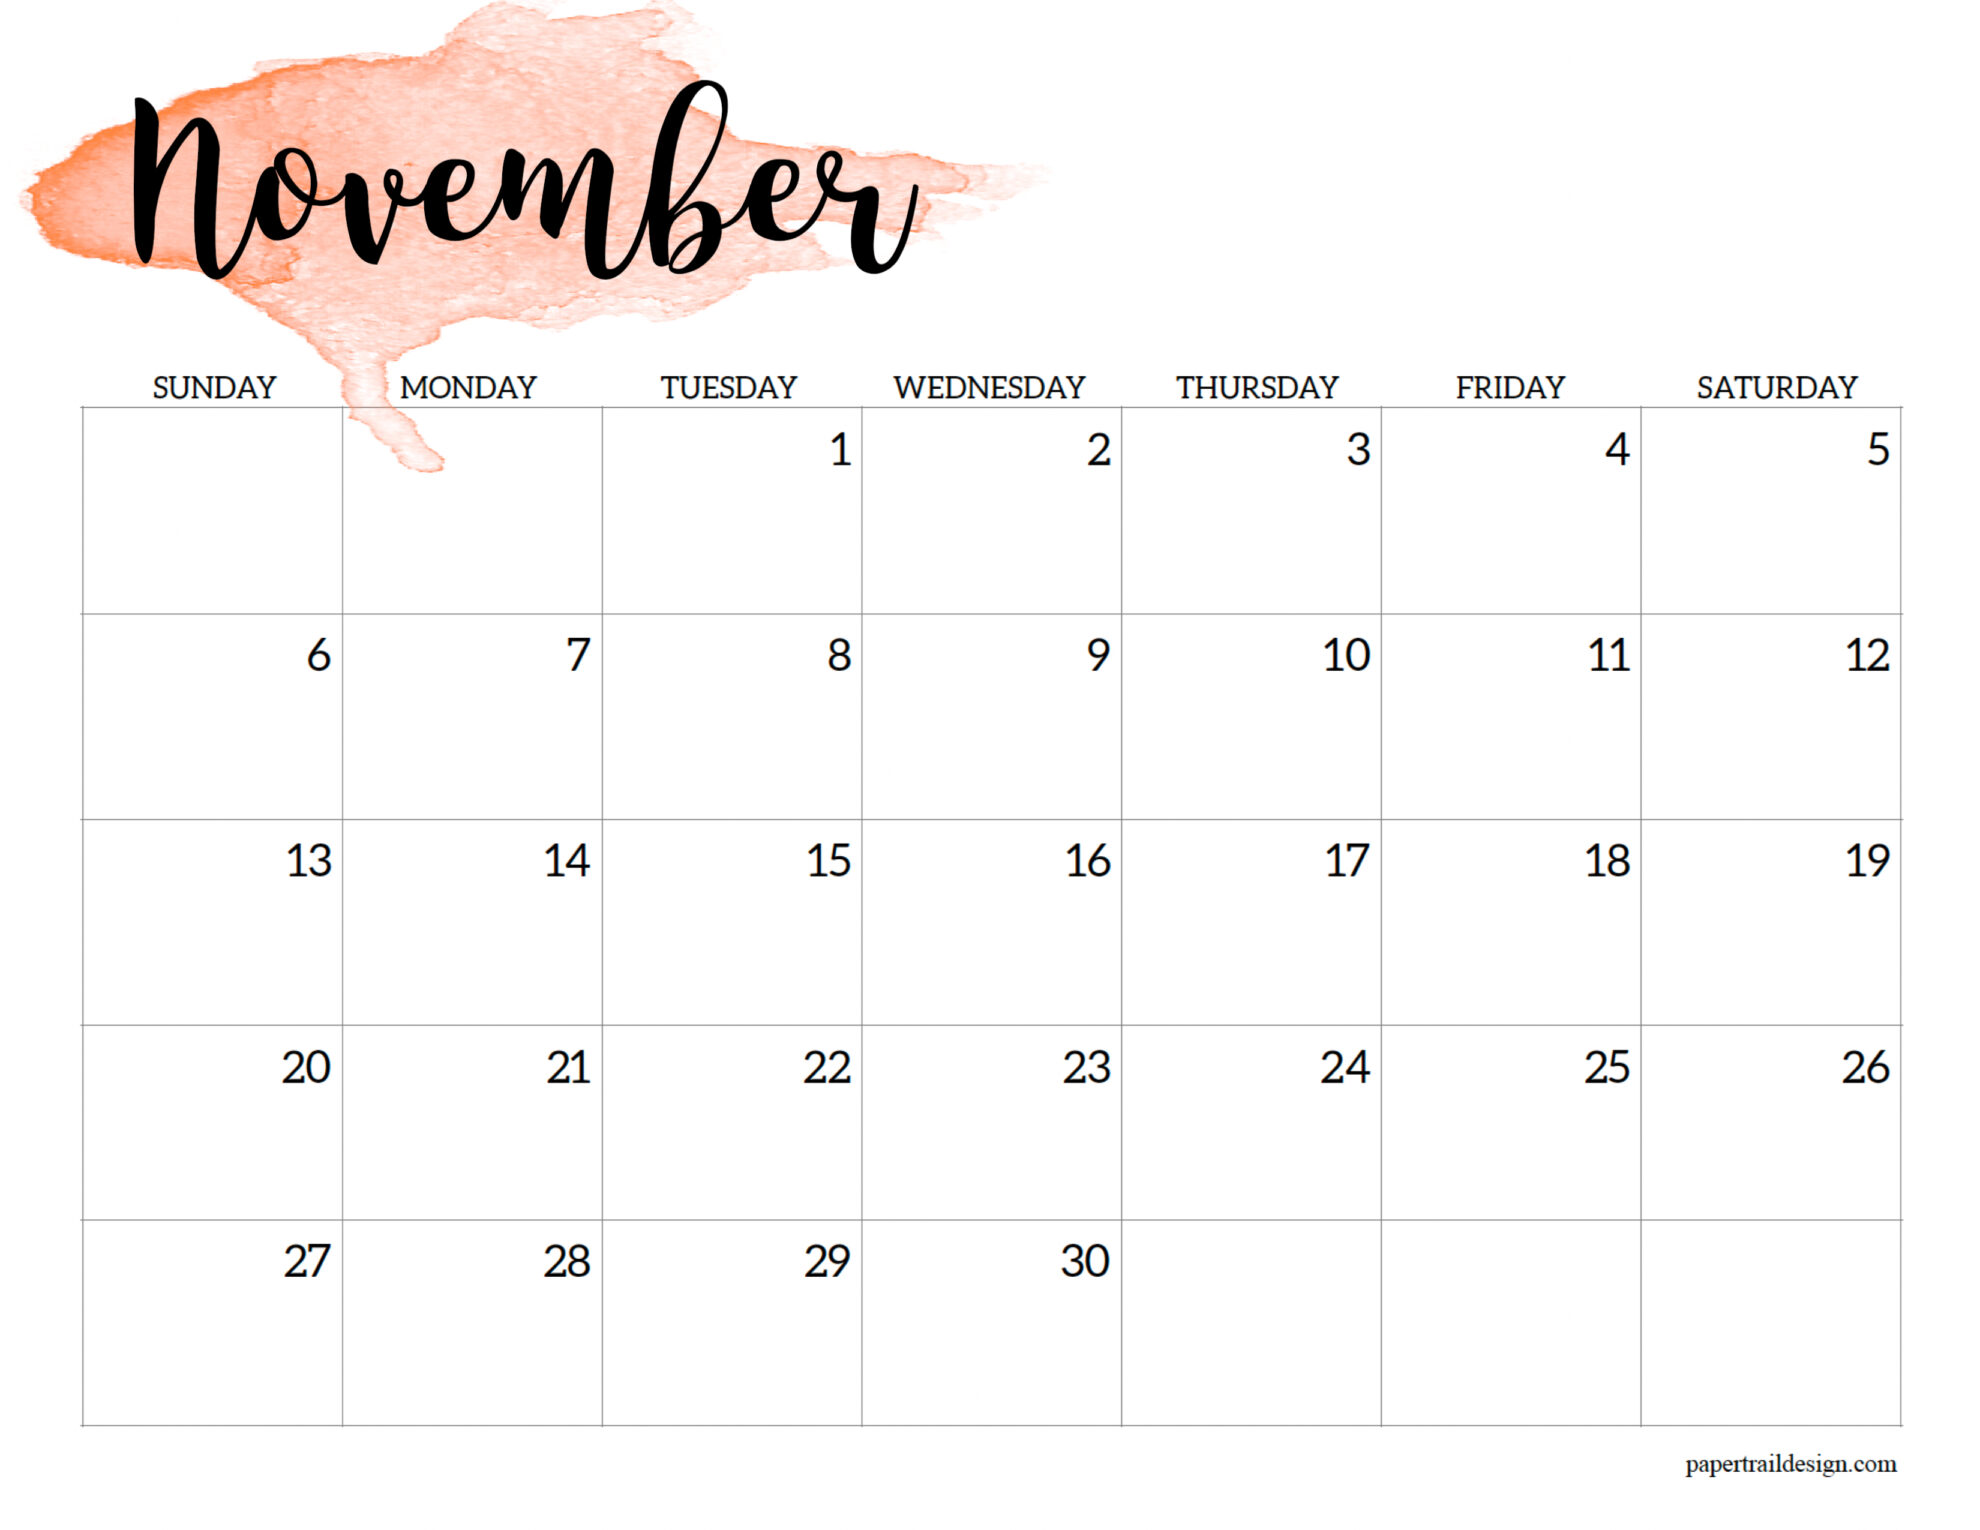 November 2022 Free Printable Calendar 2022 Calendar Printable - Watercolor - Paper Trail Design